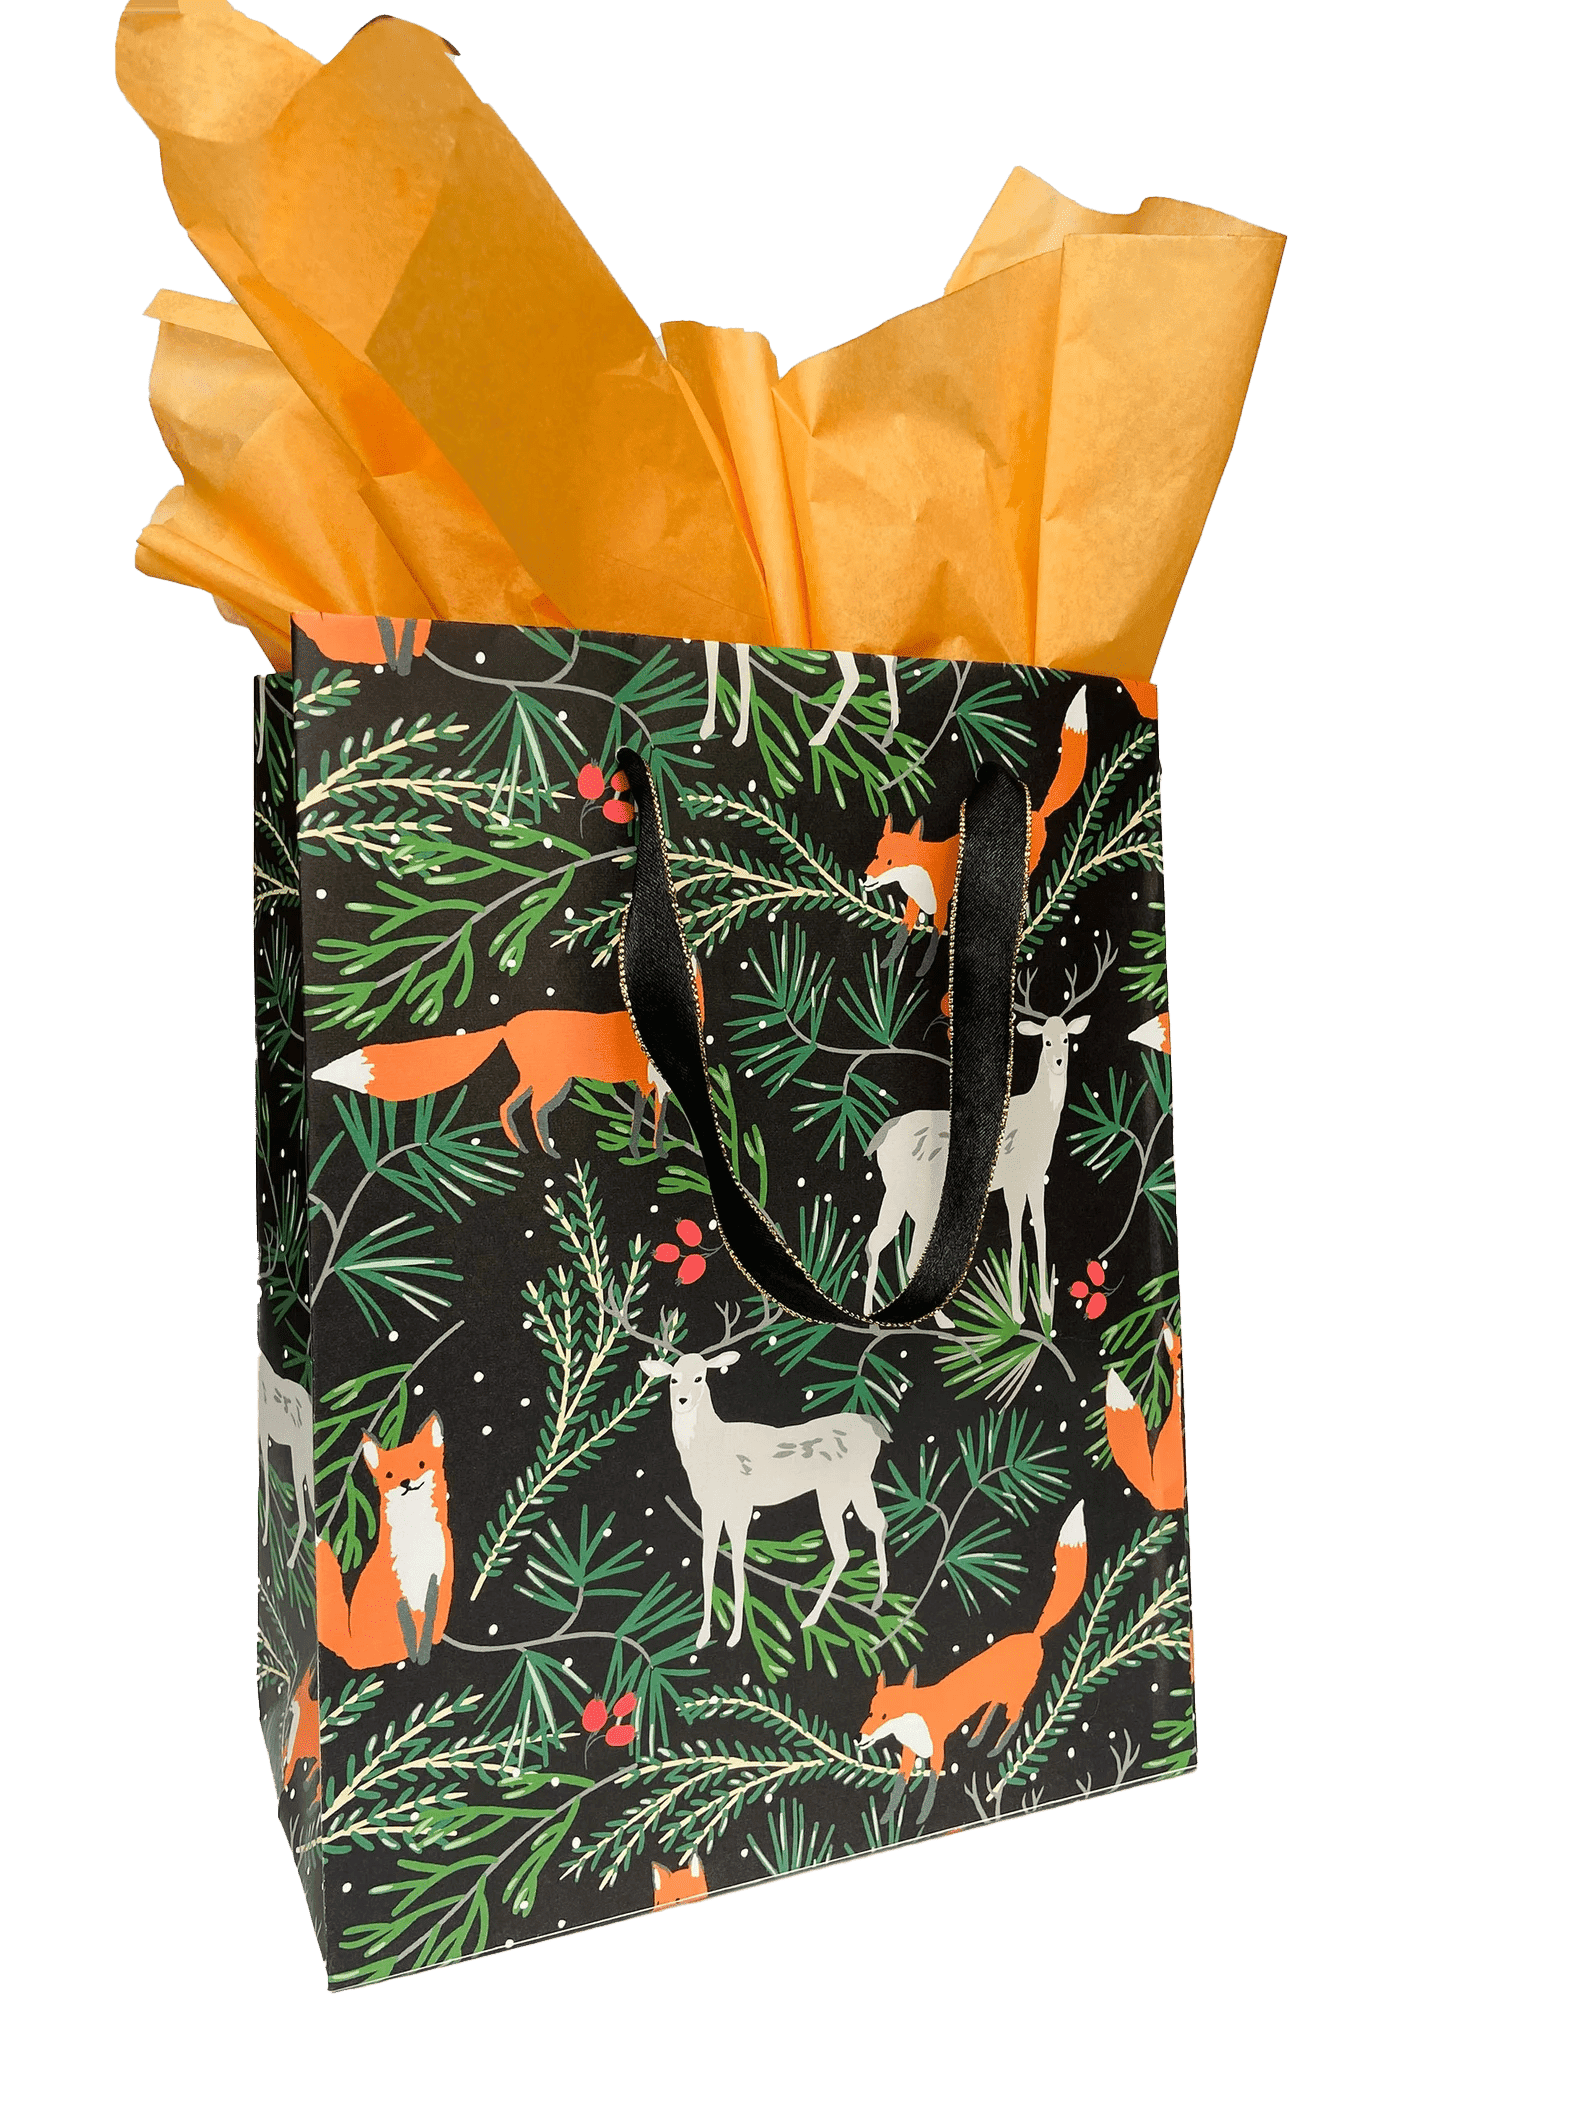 Woodland Fox Gift Bags